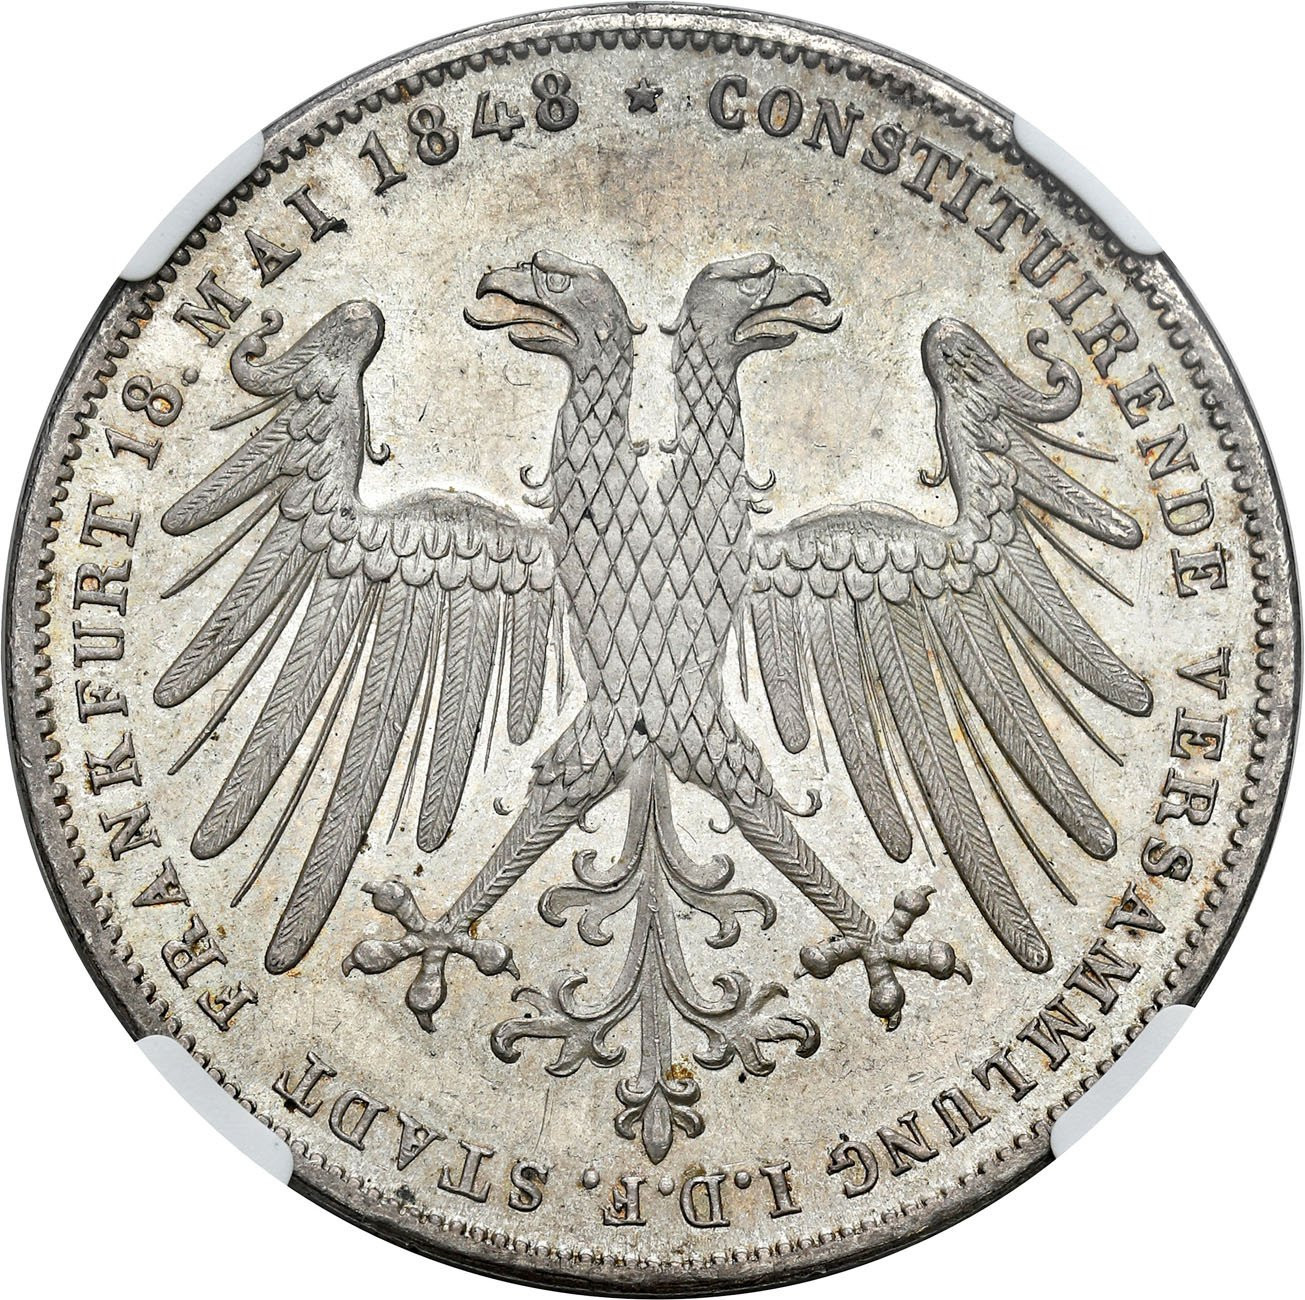 Niemcy. Talar 1848, Frankfurt NGC MS64 - PIĘKNY